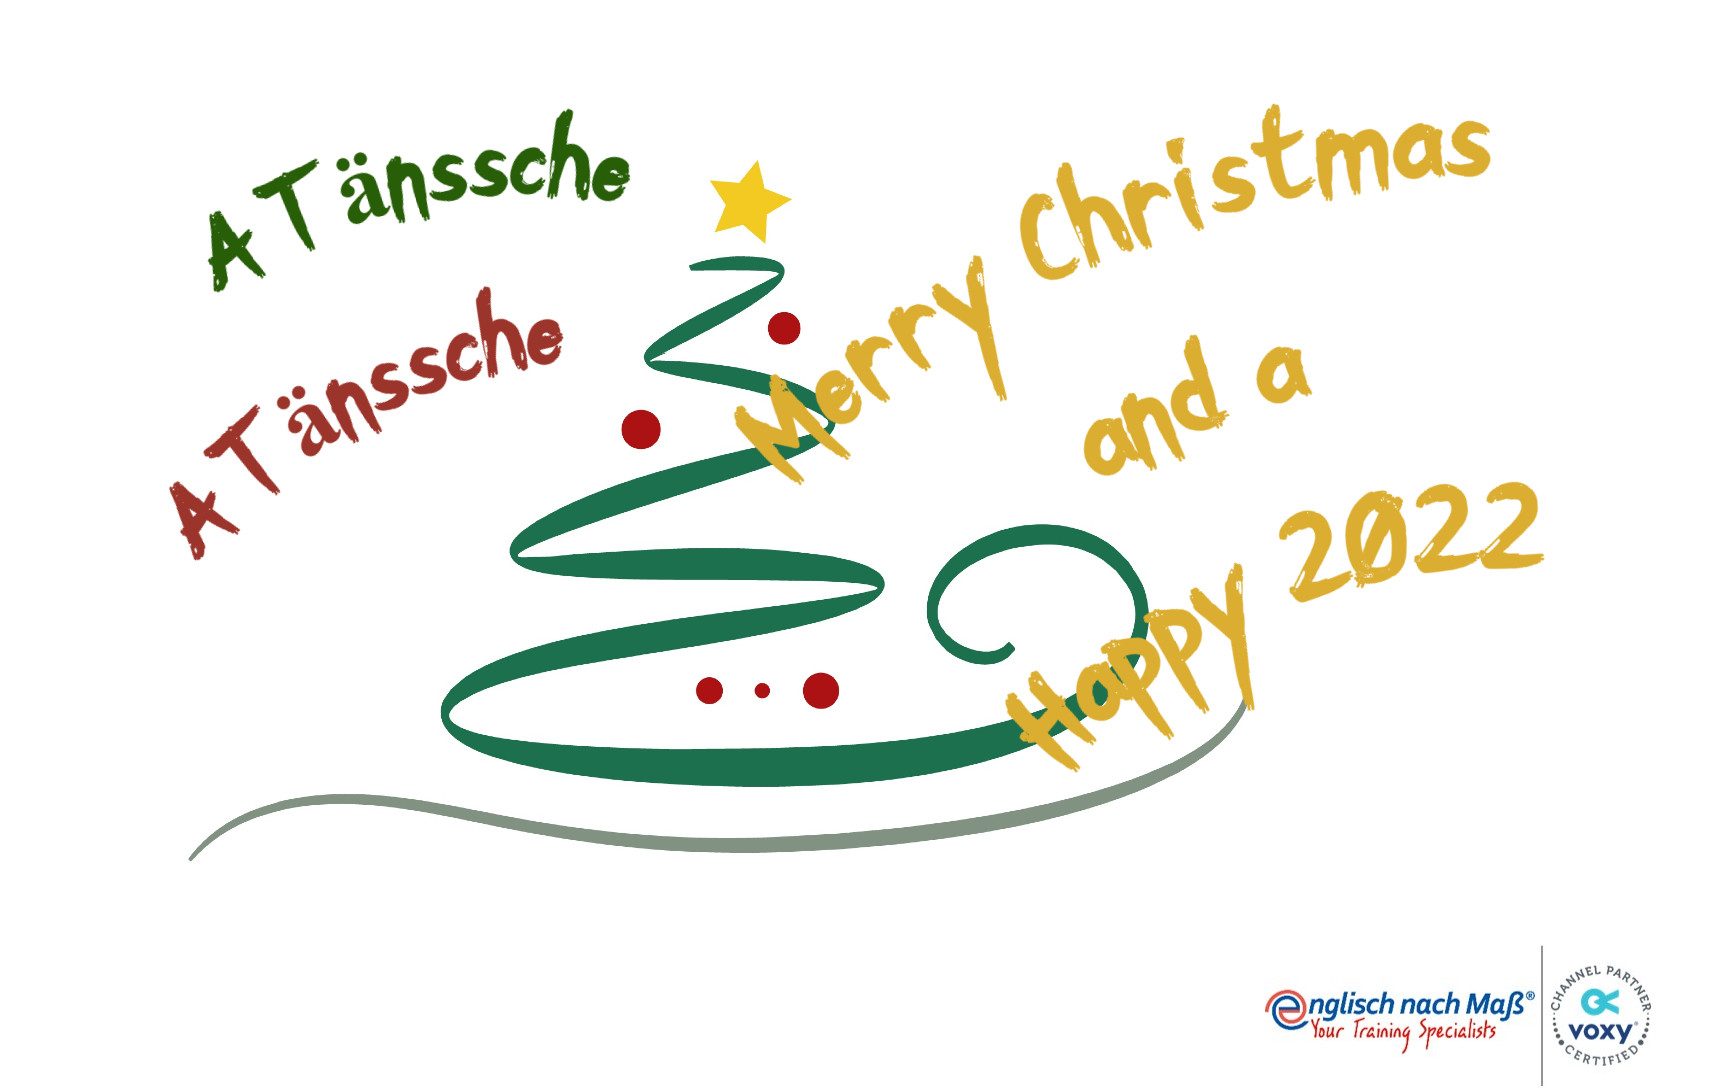 Christmas Tree Text: A Tännsche A Tännsche Merry Christmas and a Happy 2022